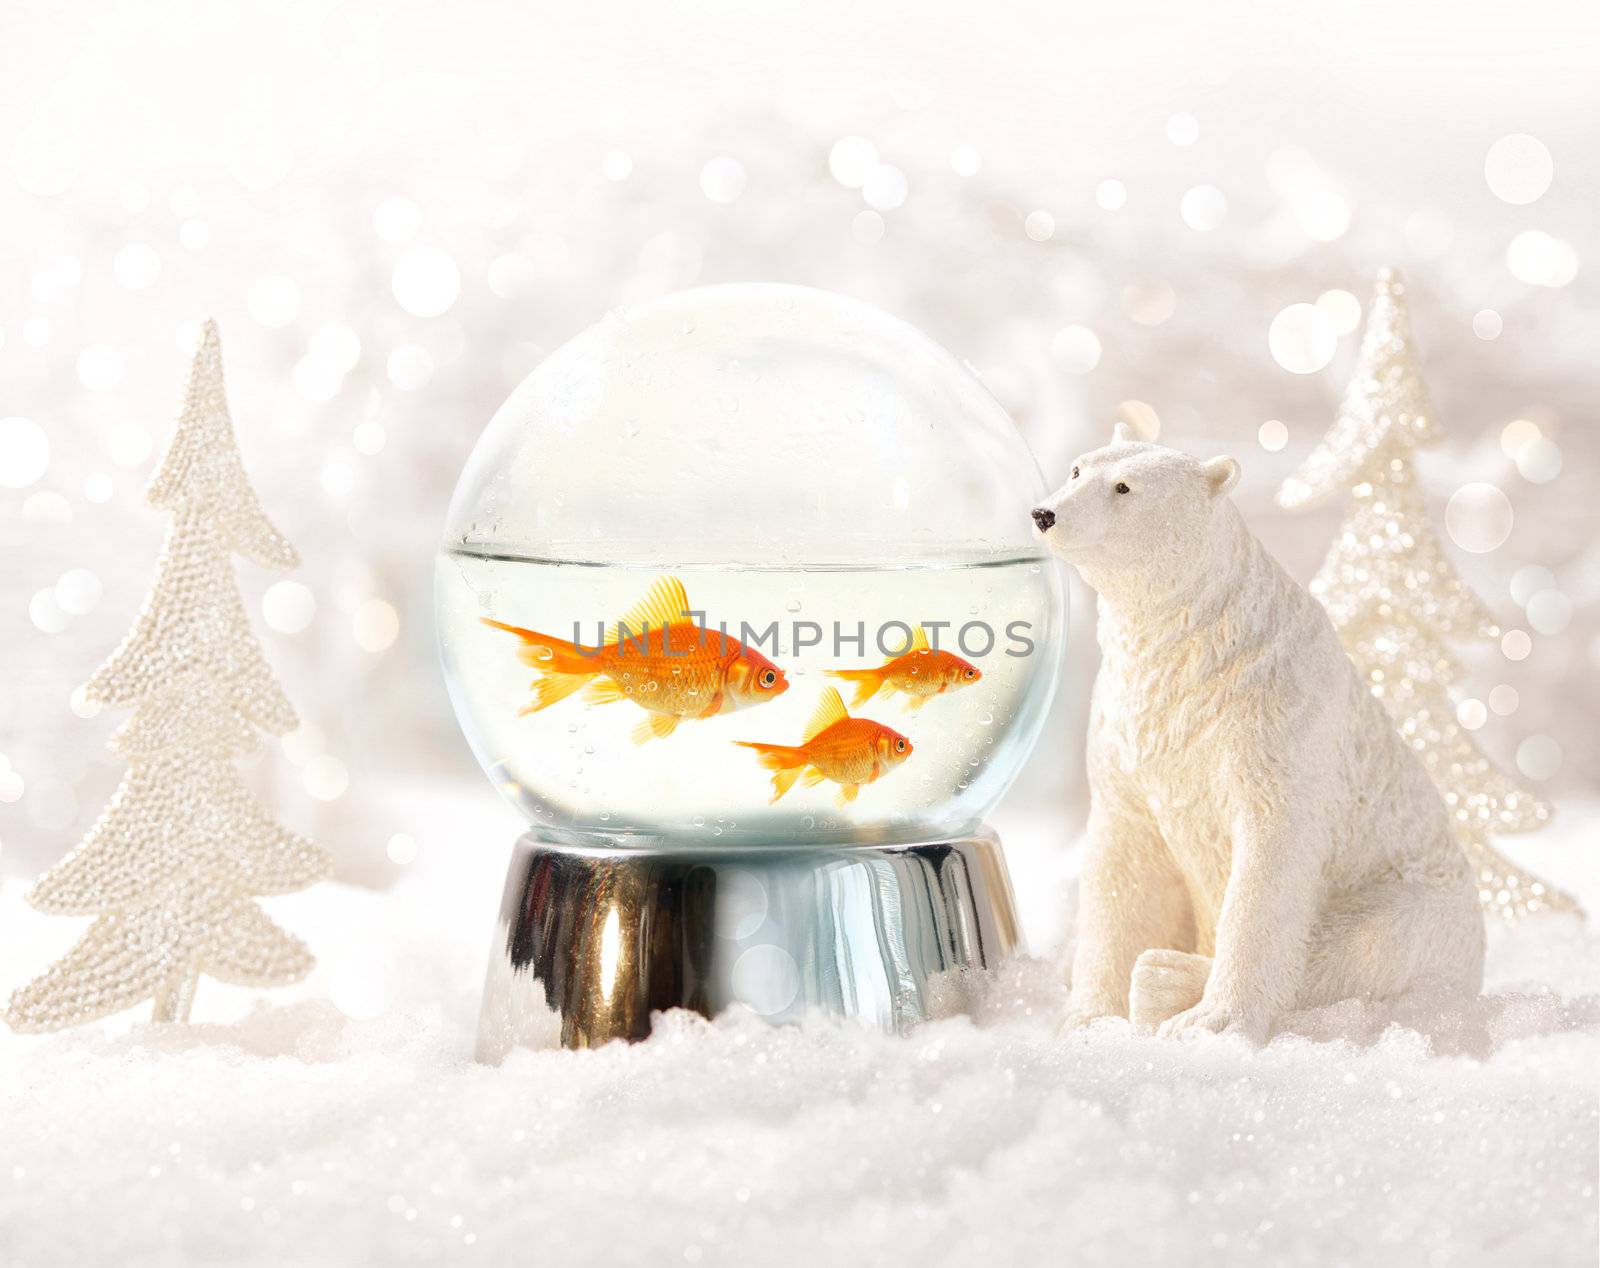 Snow globe with fish in magical winter scene